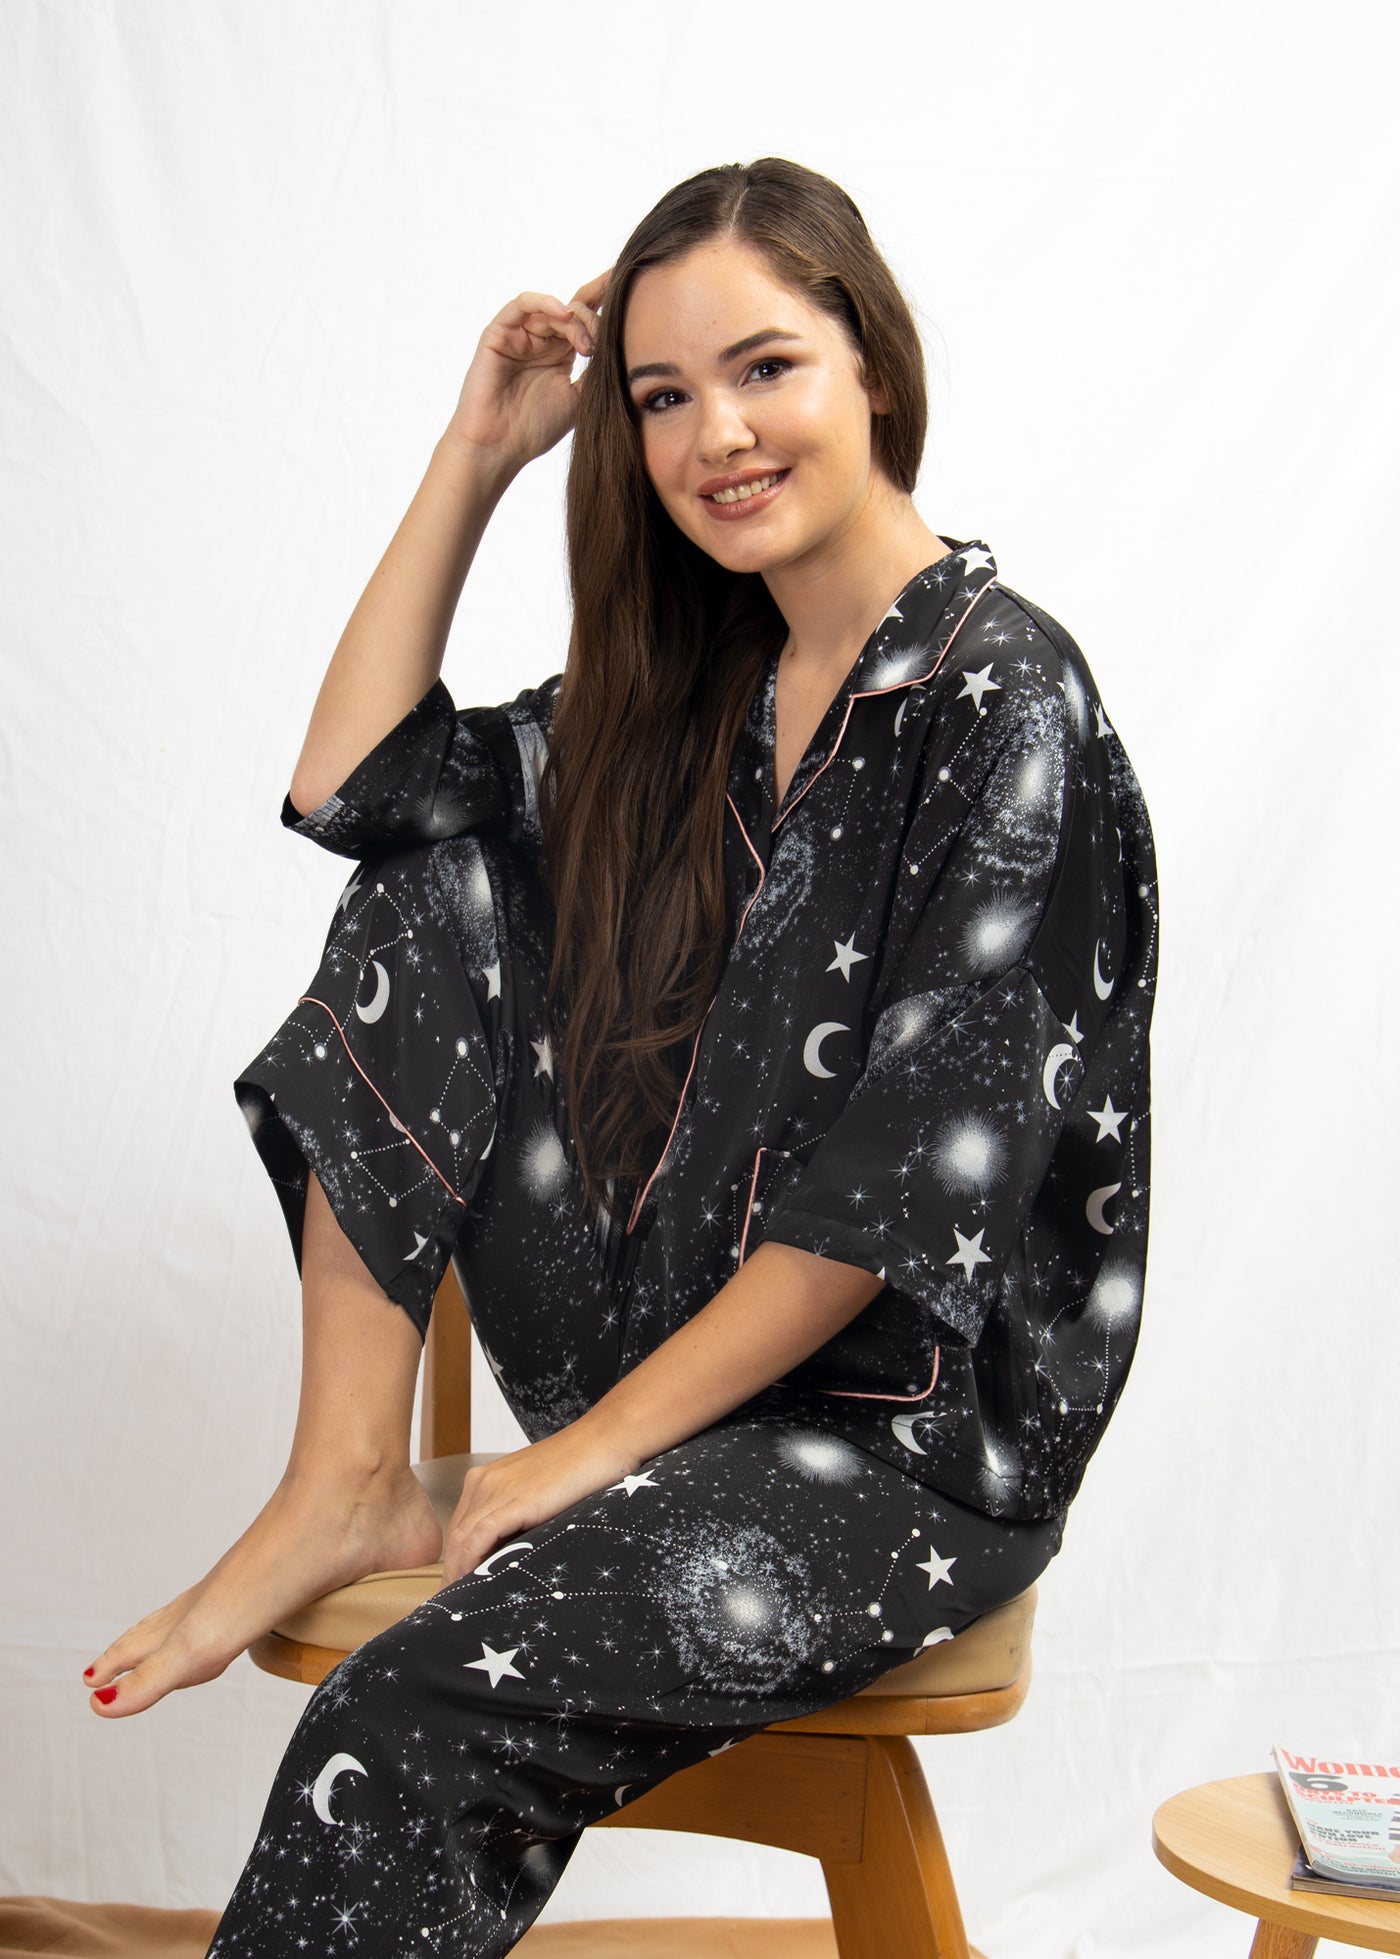 A woman sitting and wearing a long sleeve pajama set